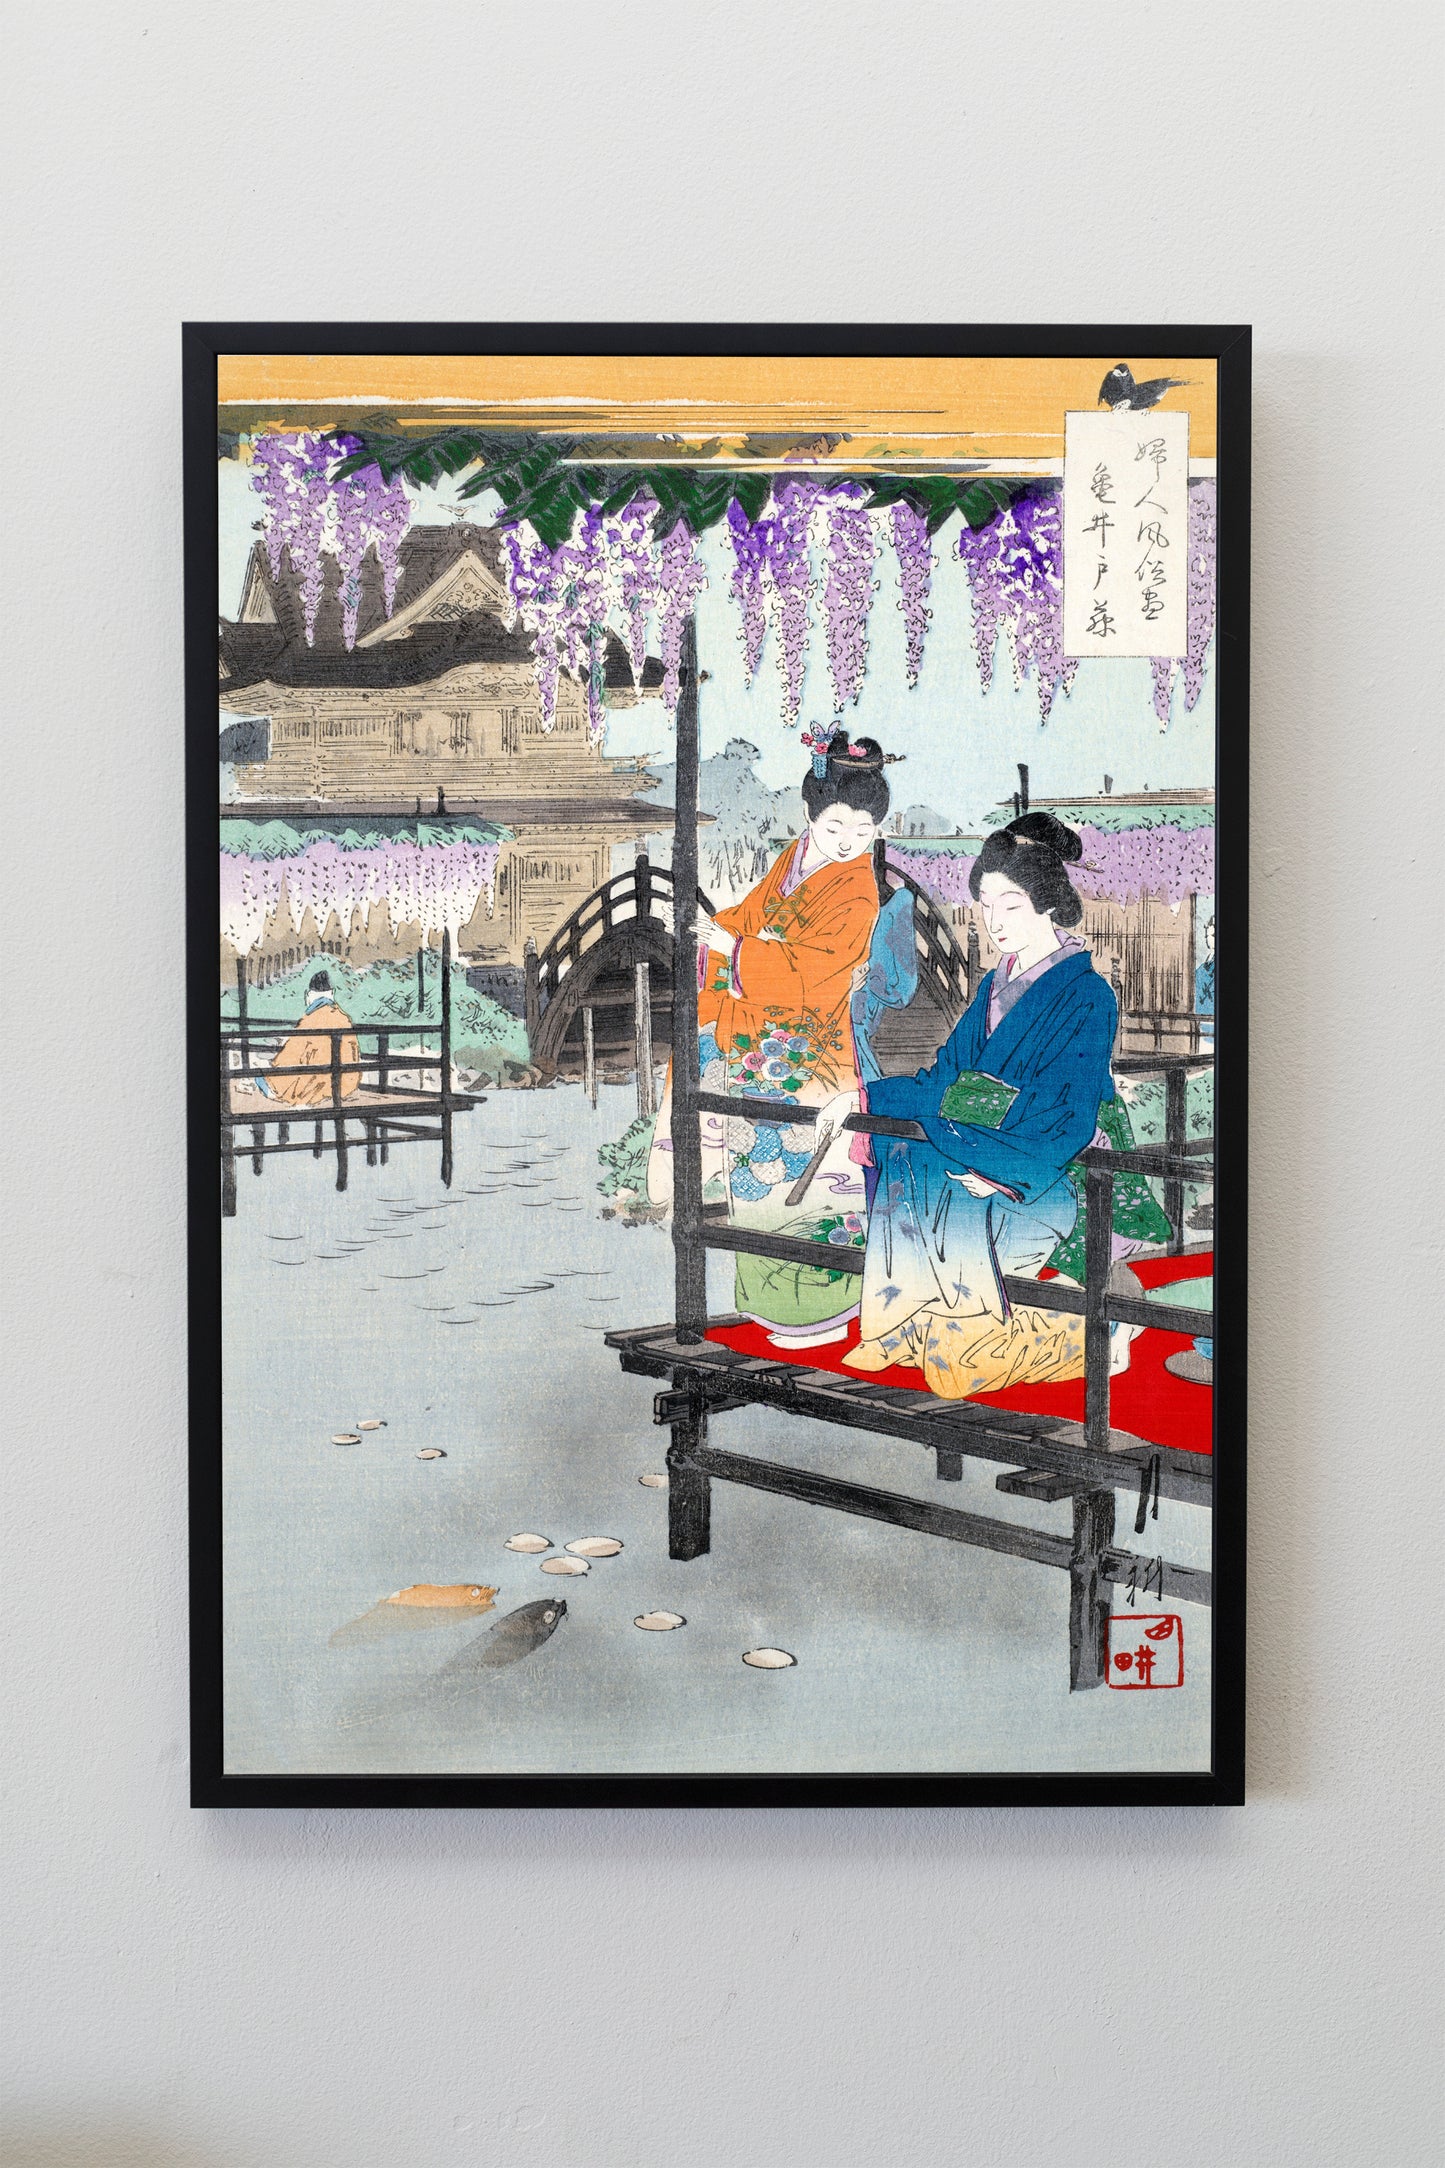 Two Maidens on Veranda Overlooking Fish Pond  Japan Japanese Poster Illustration Print Wall Hanging Decor